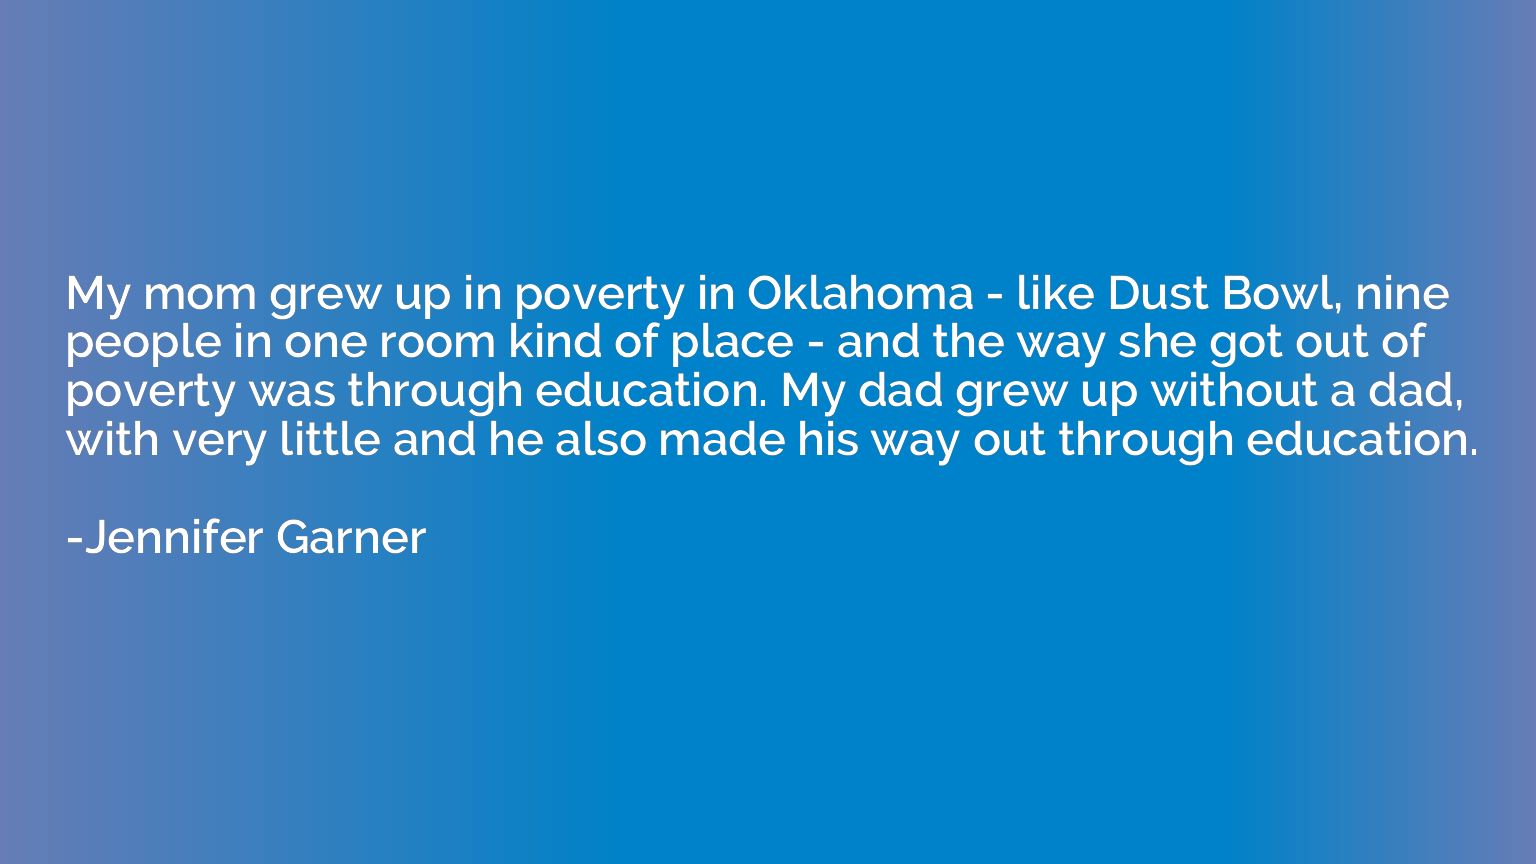 My mom grew up in poverty in Oklahoma - like Dust Bowl, nine